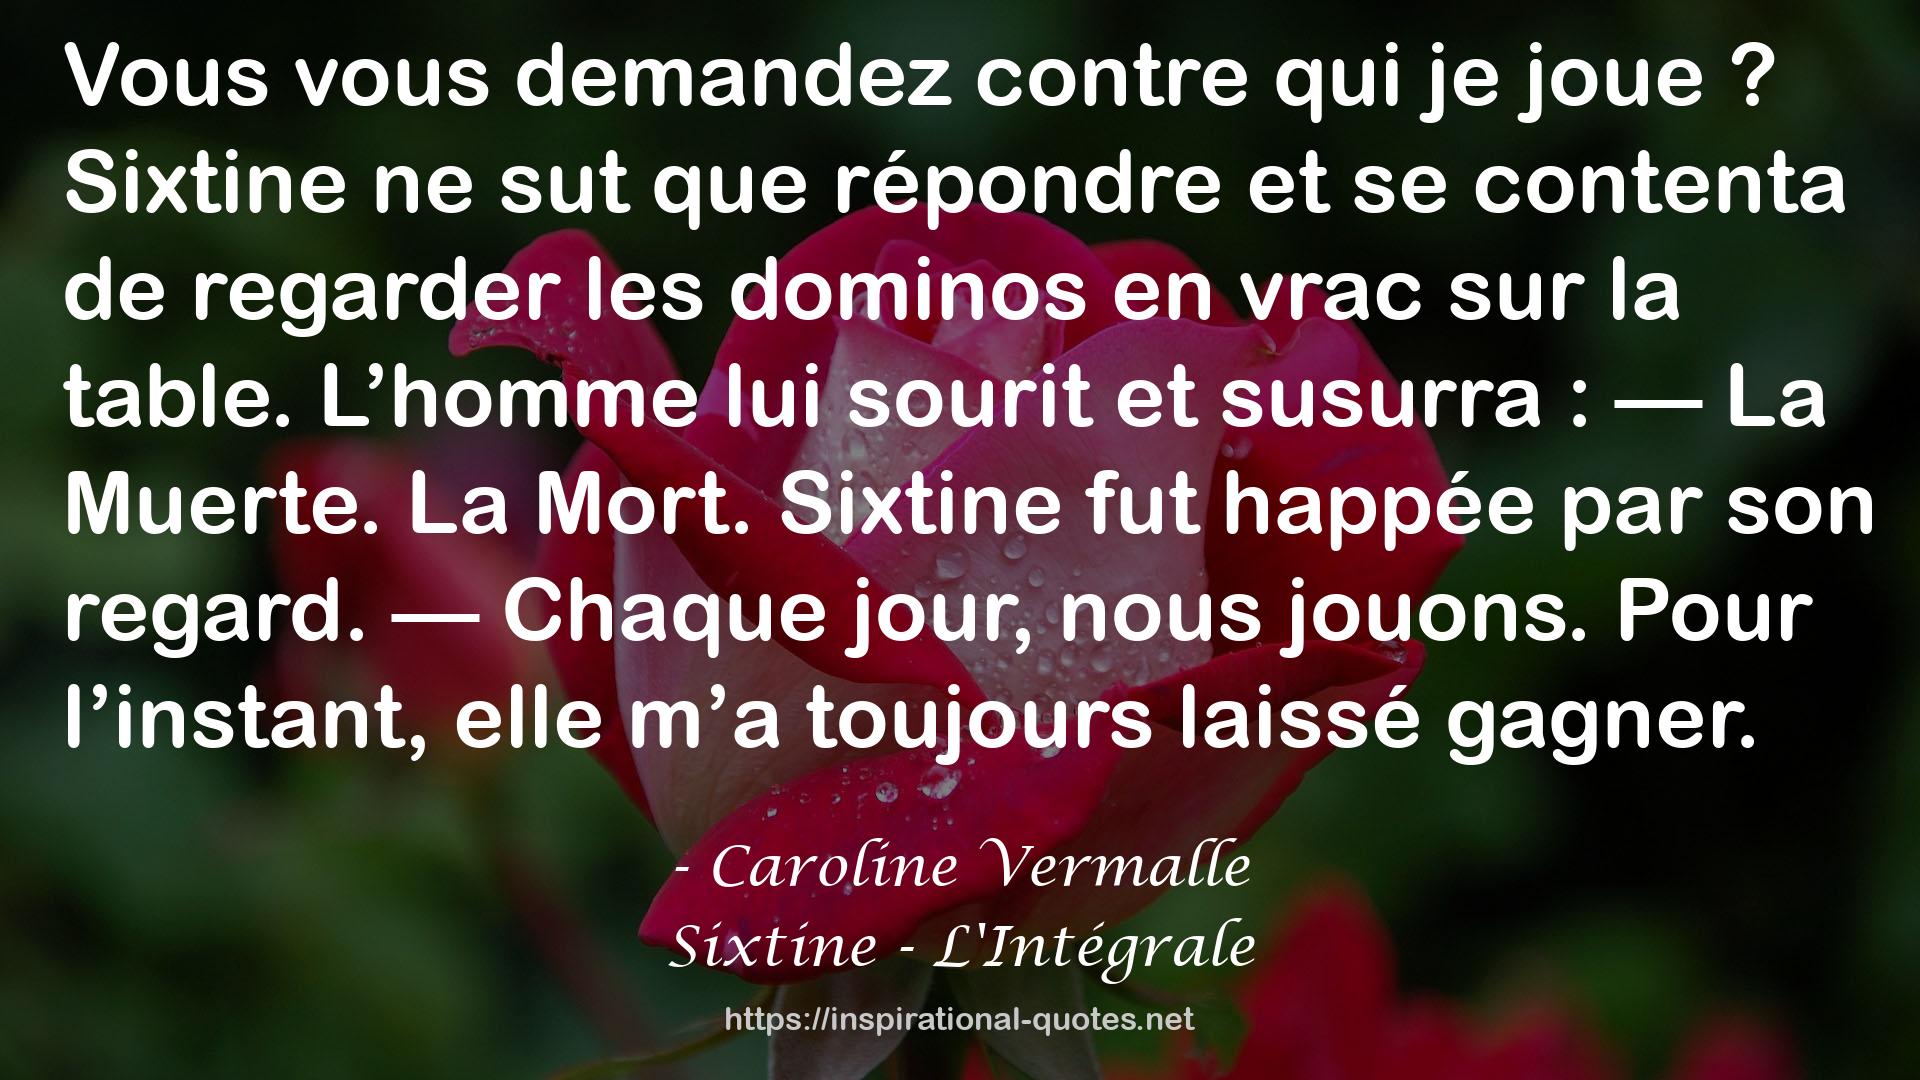 Sixtine - L'Intégrale QUOTES